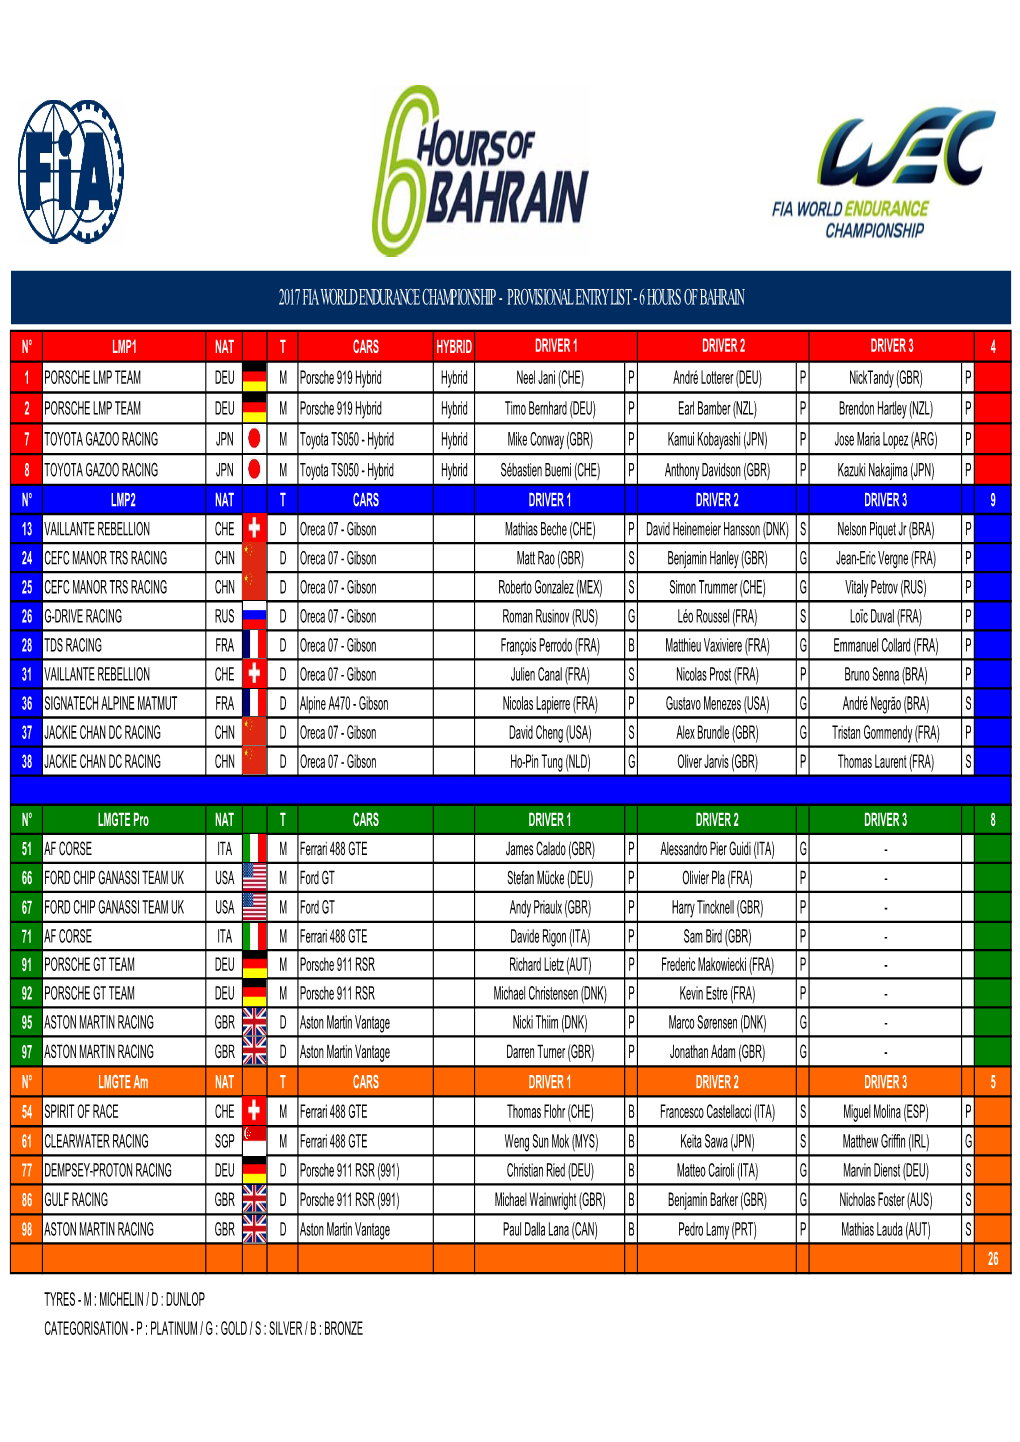 2017 Fia World Endurance Championship - Provisional Entry List - 6 Hours of Bahrain